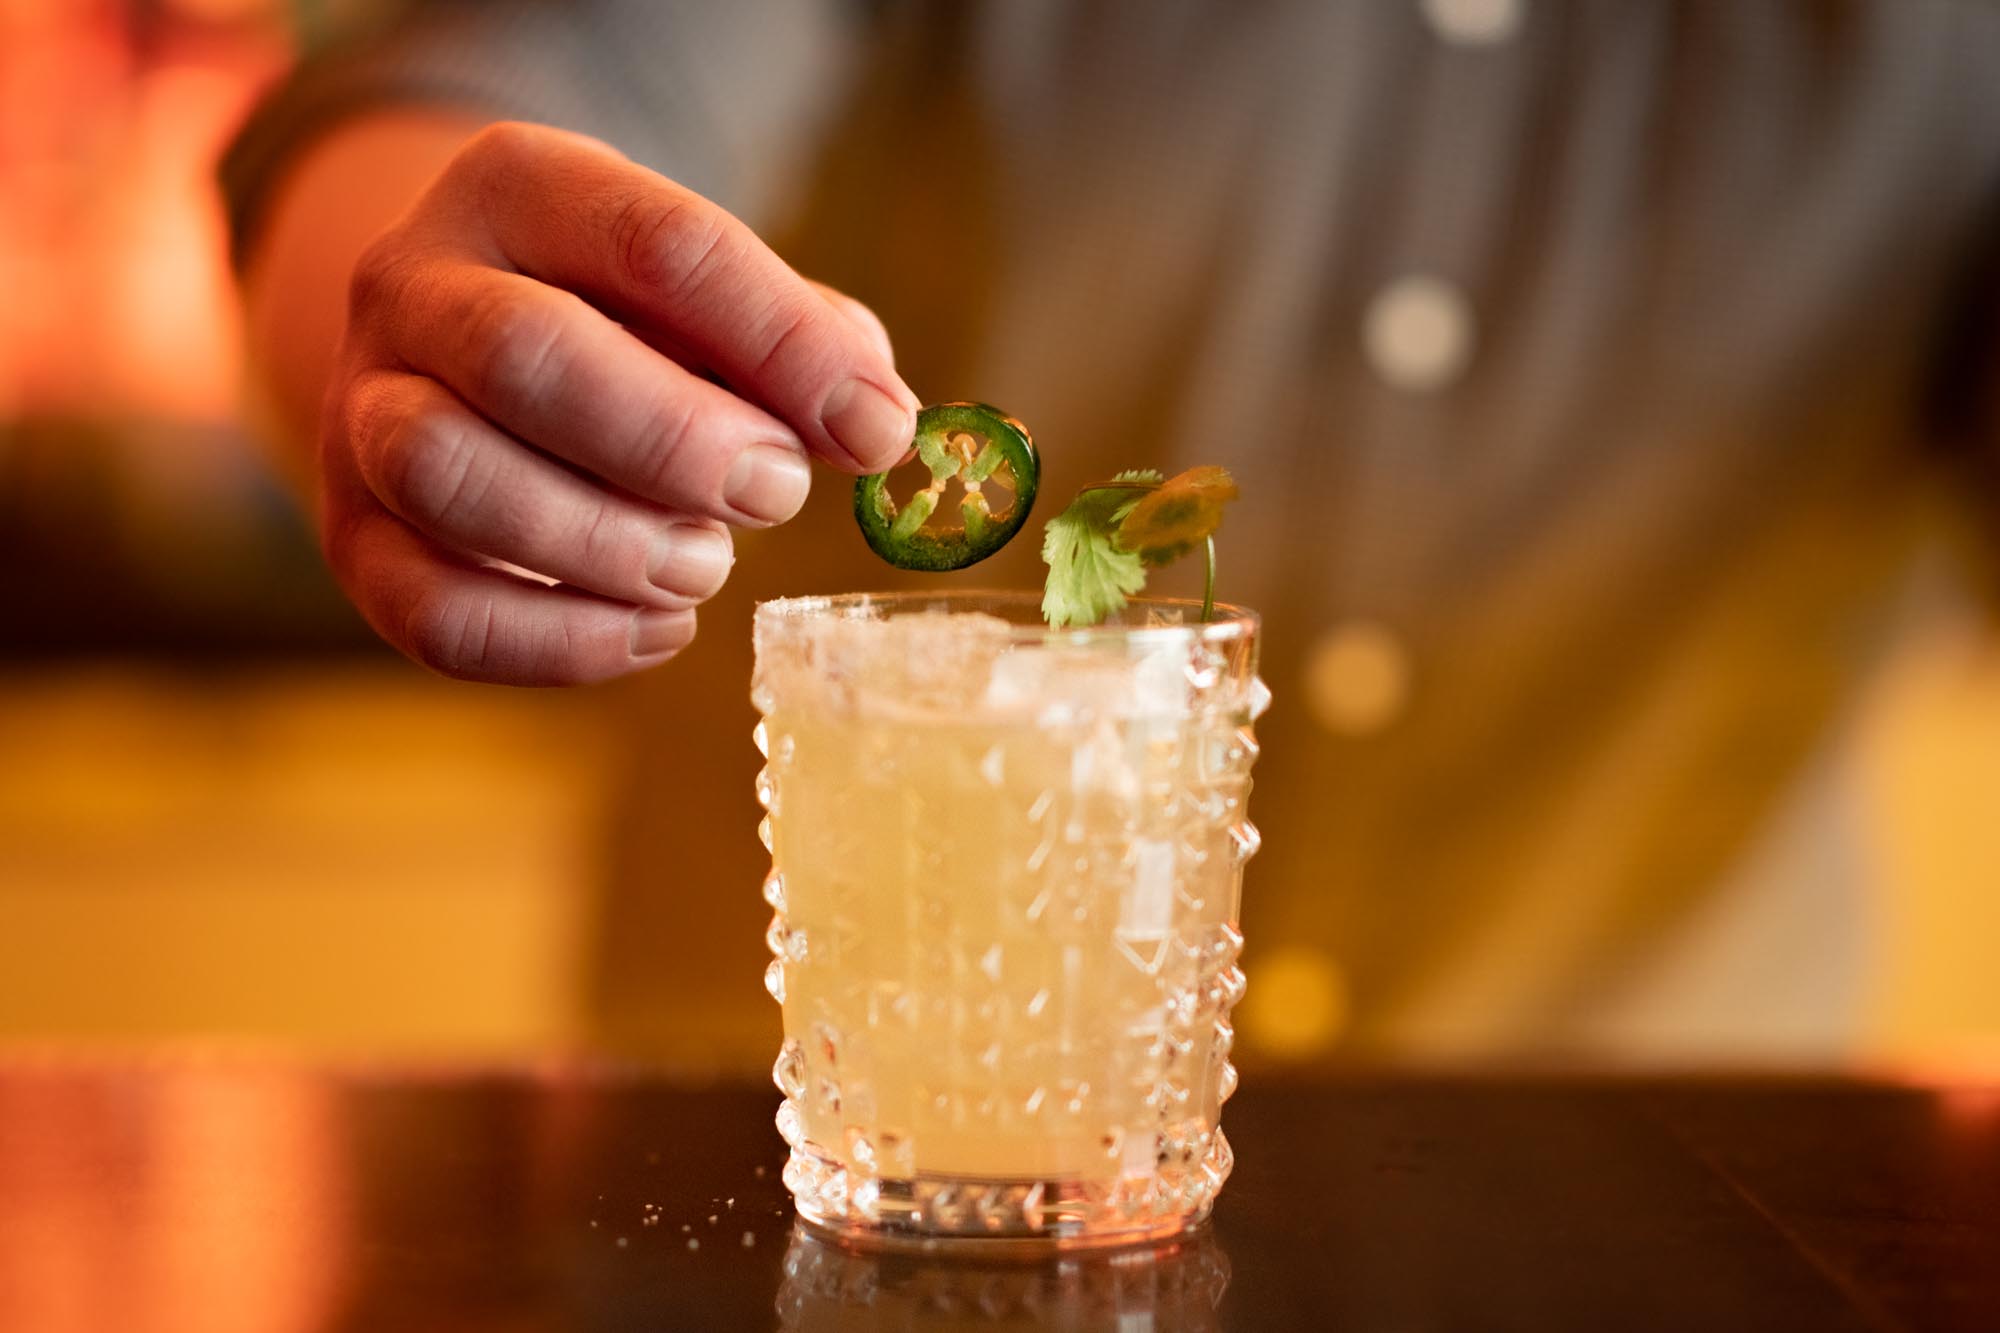 Cocktail with Jalapeño garnish